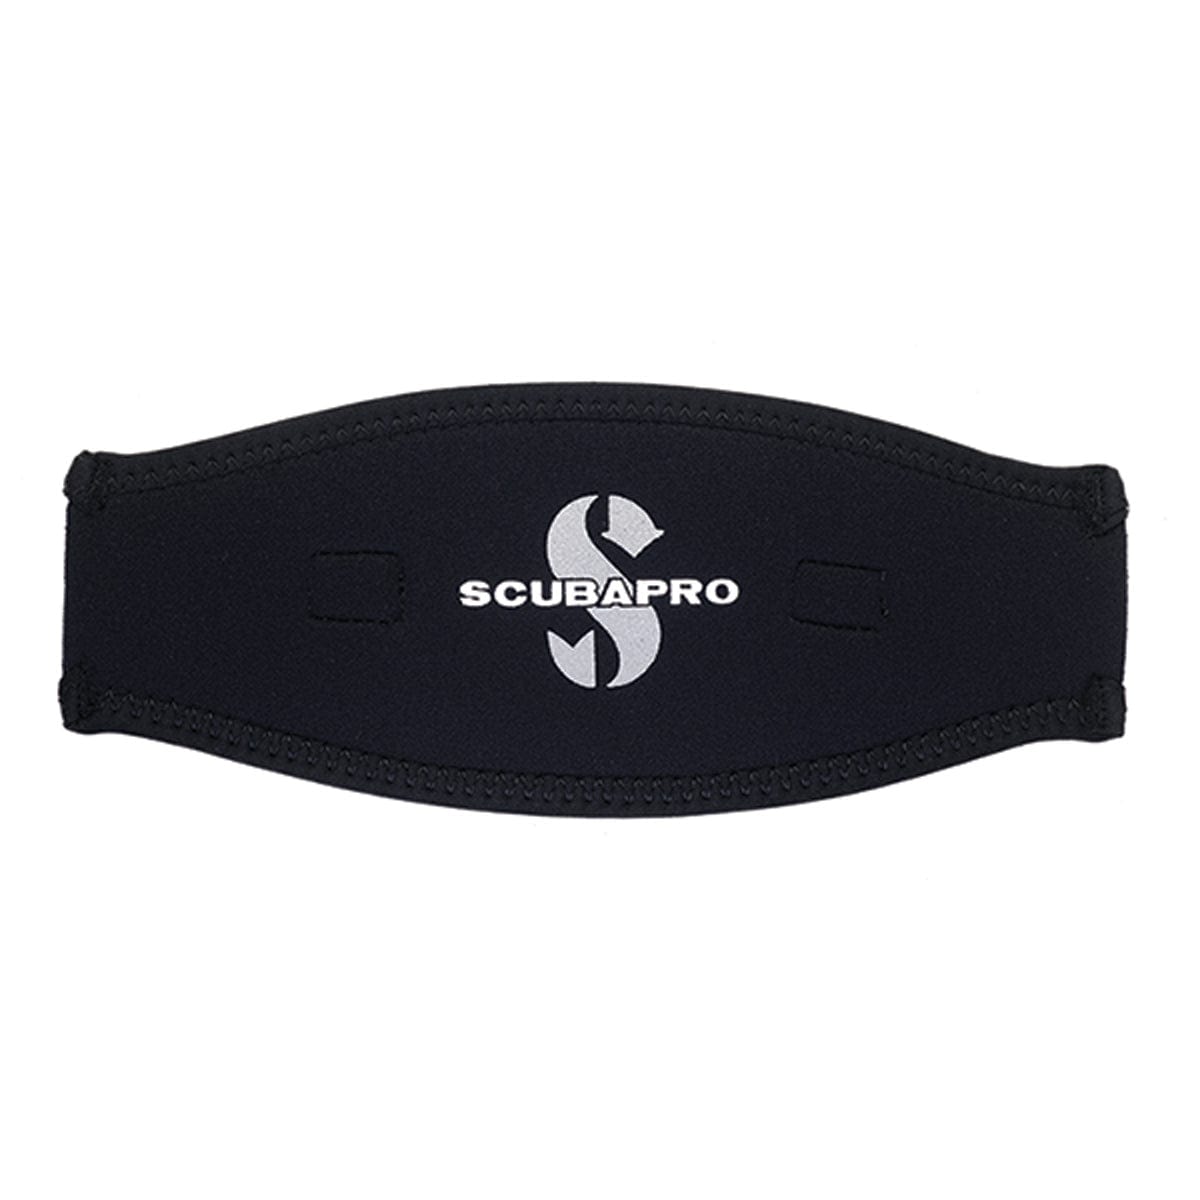 Scubapro Neoprene Mask Strap 2.5MM - Black/Black - 2